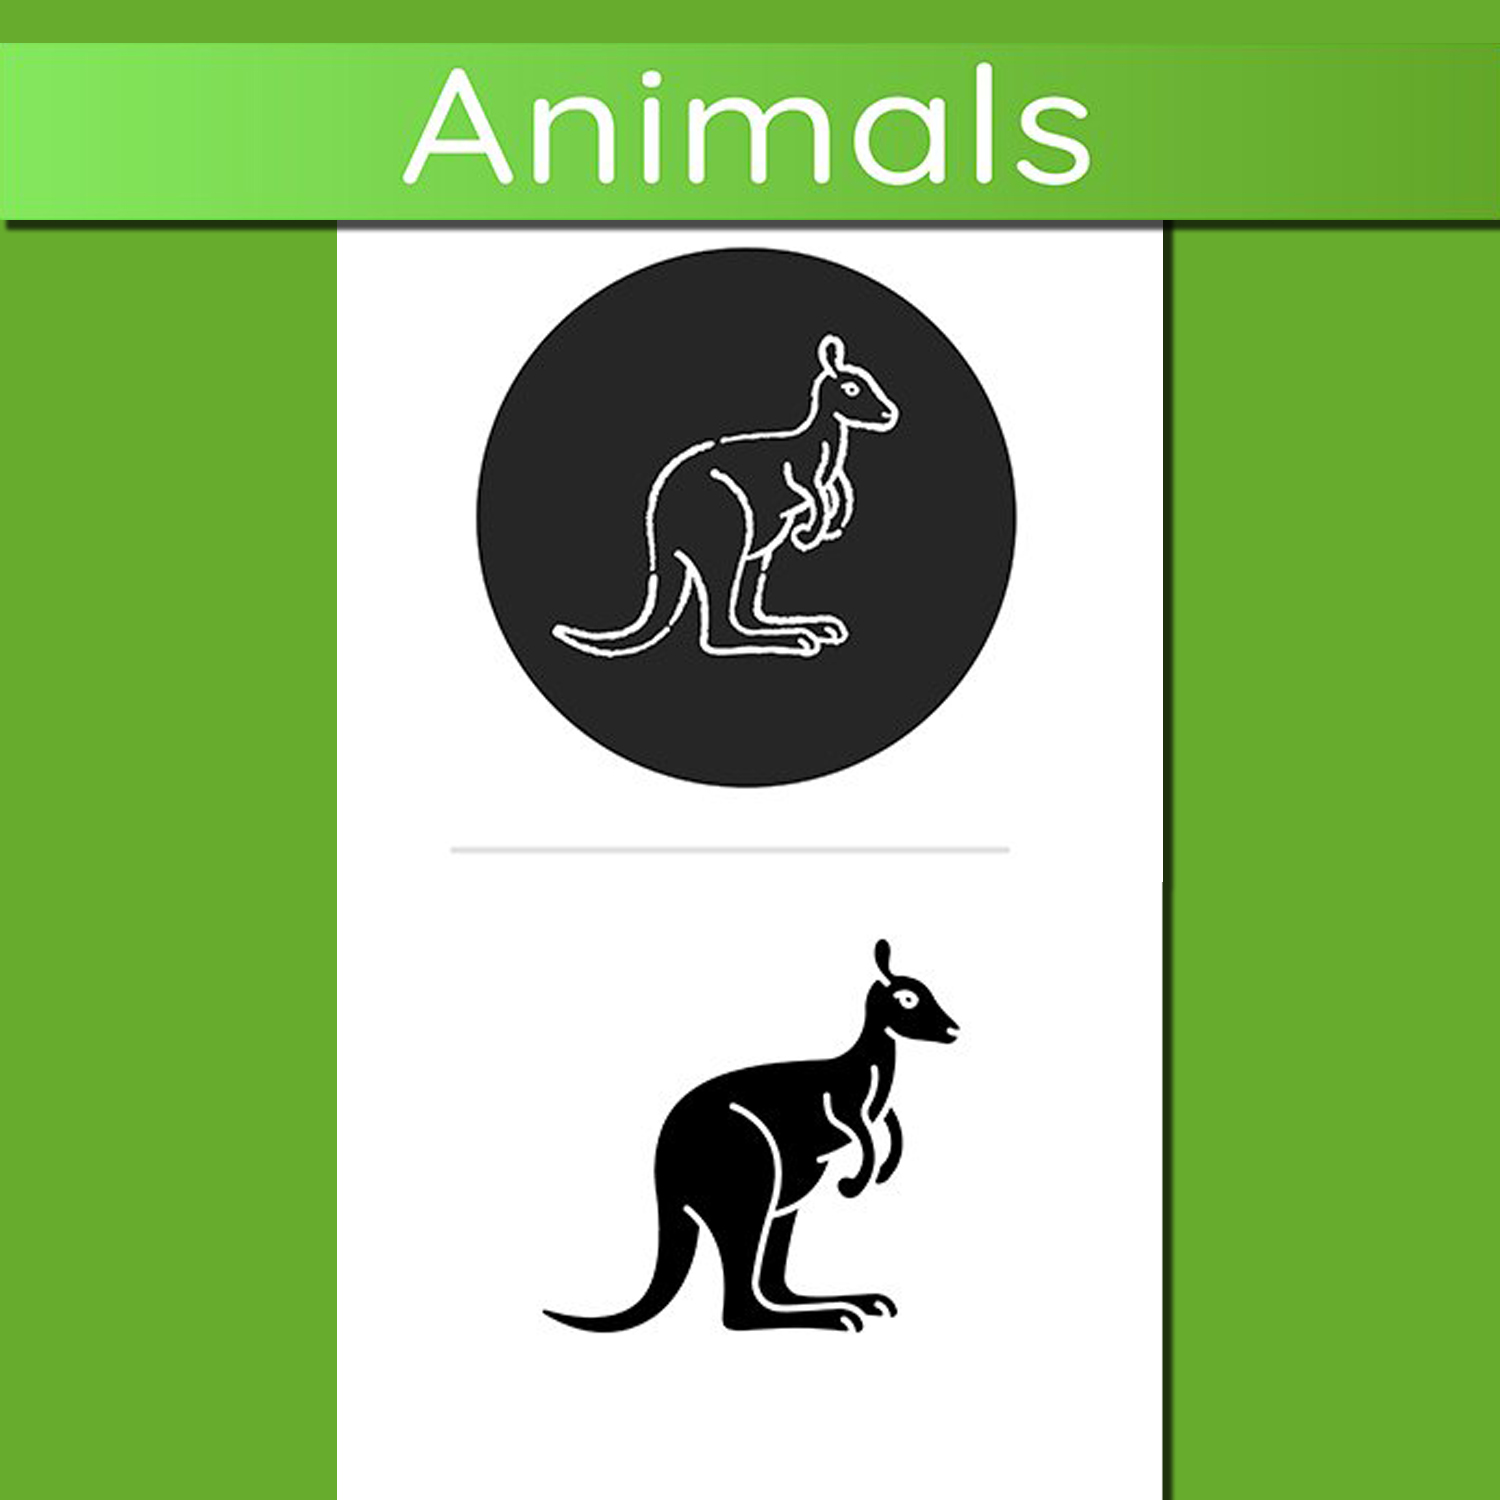 Kangaroo Icon Illustrations cover image.